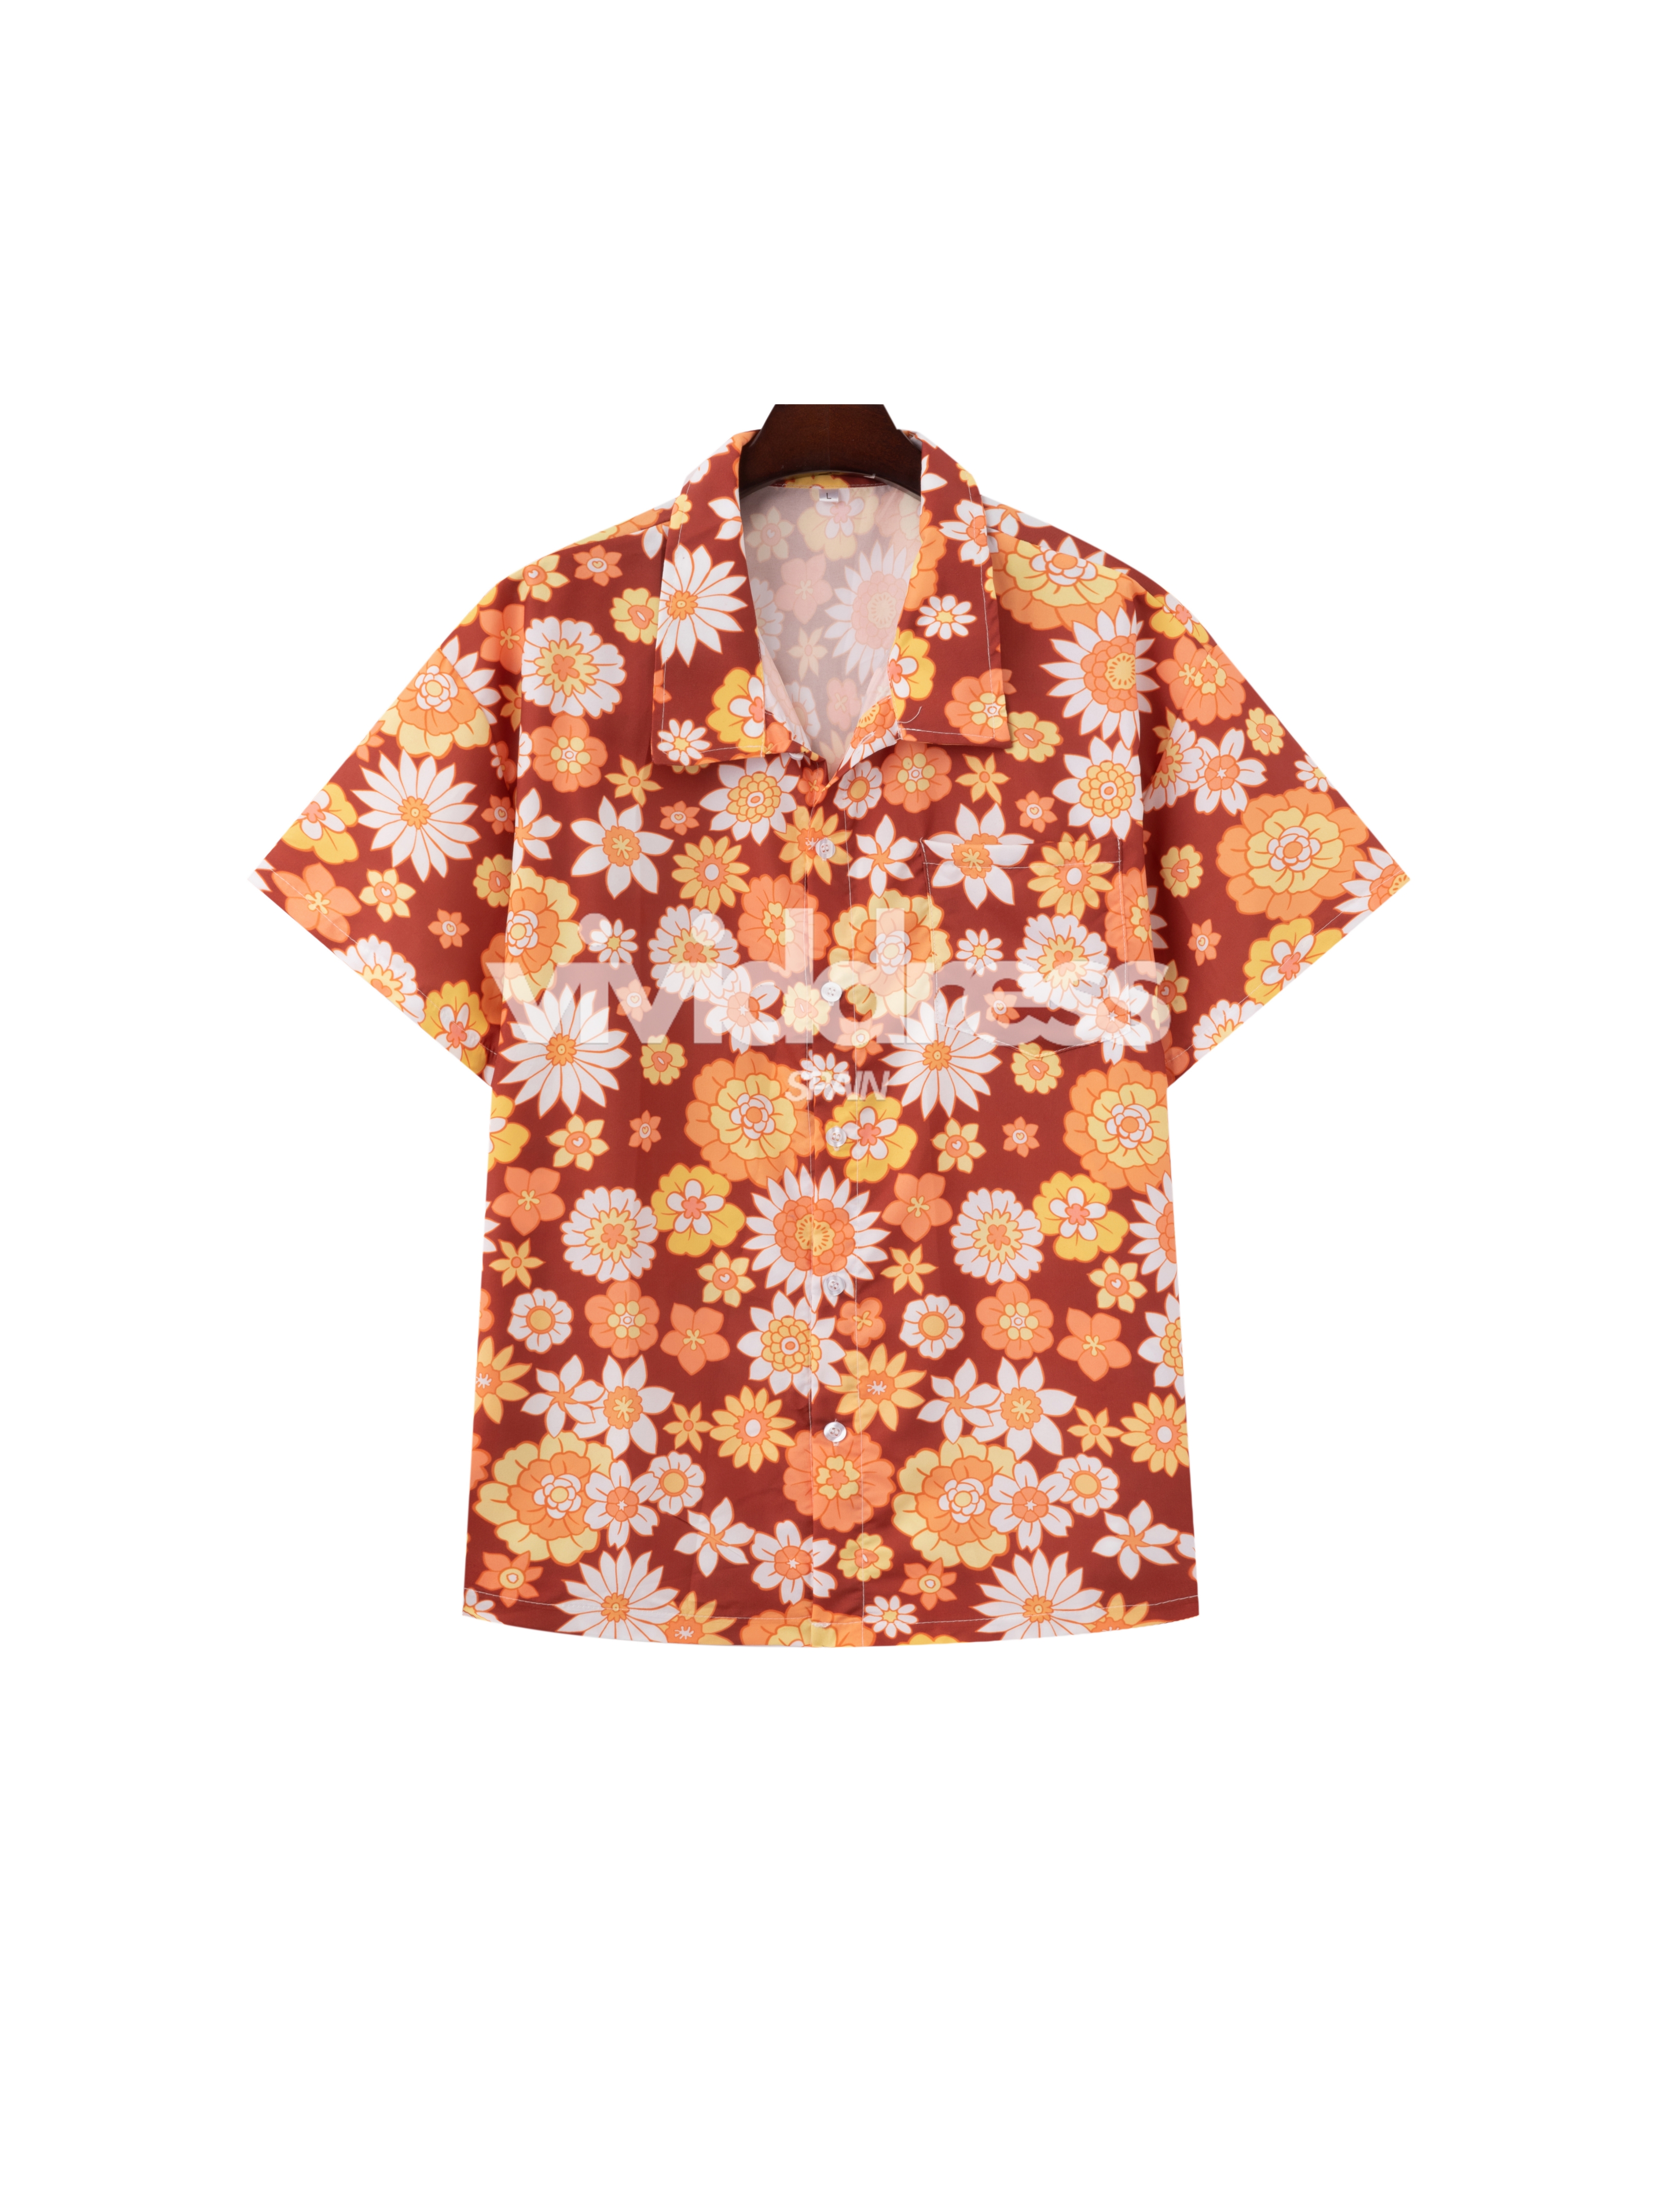 Men's Casual Flower Print Hawaiian Holiday Short Sleeve Shirt